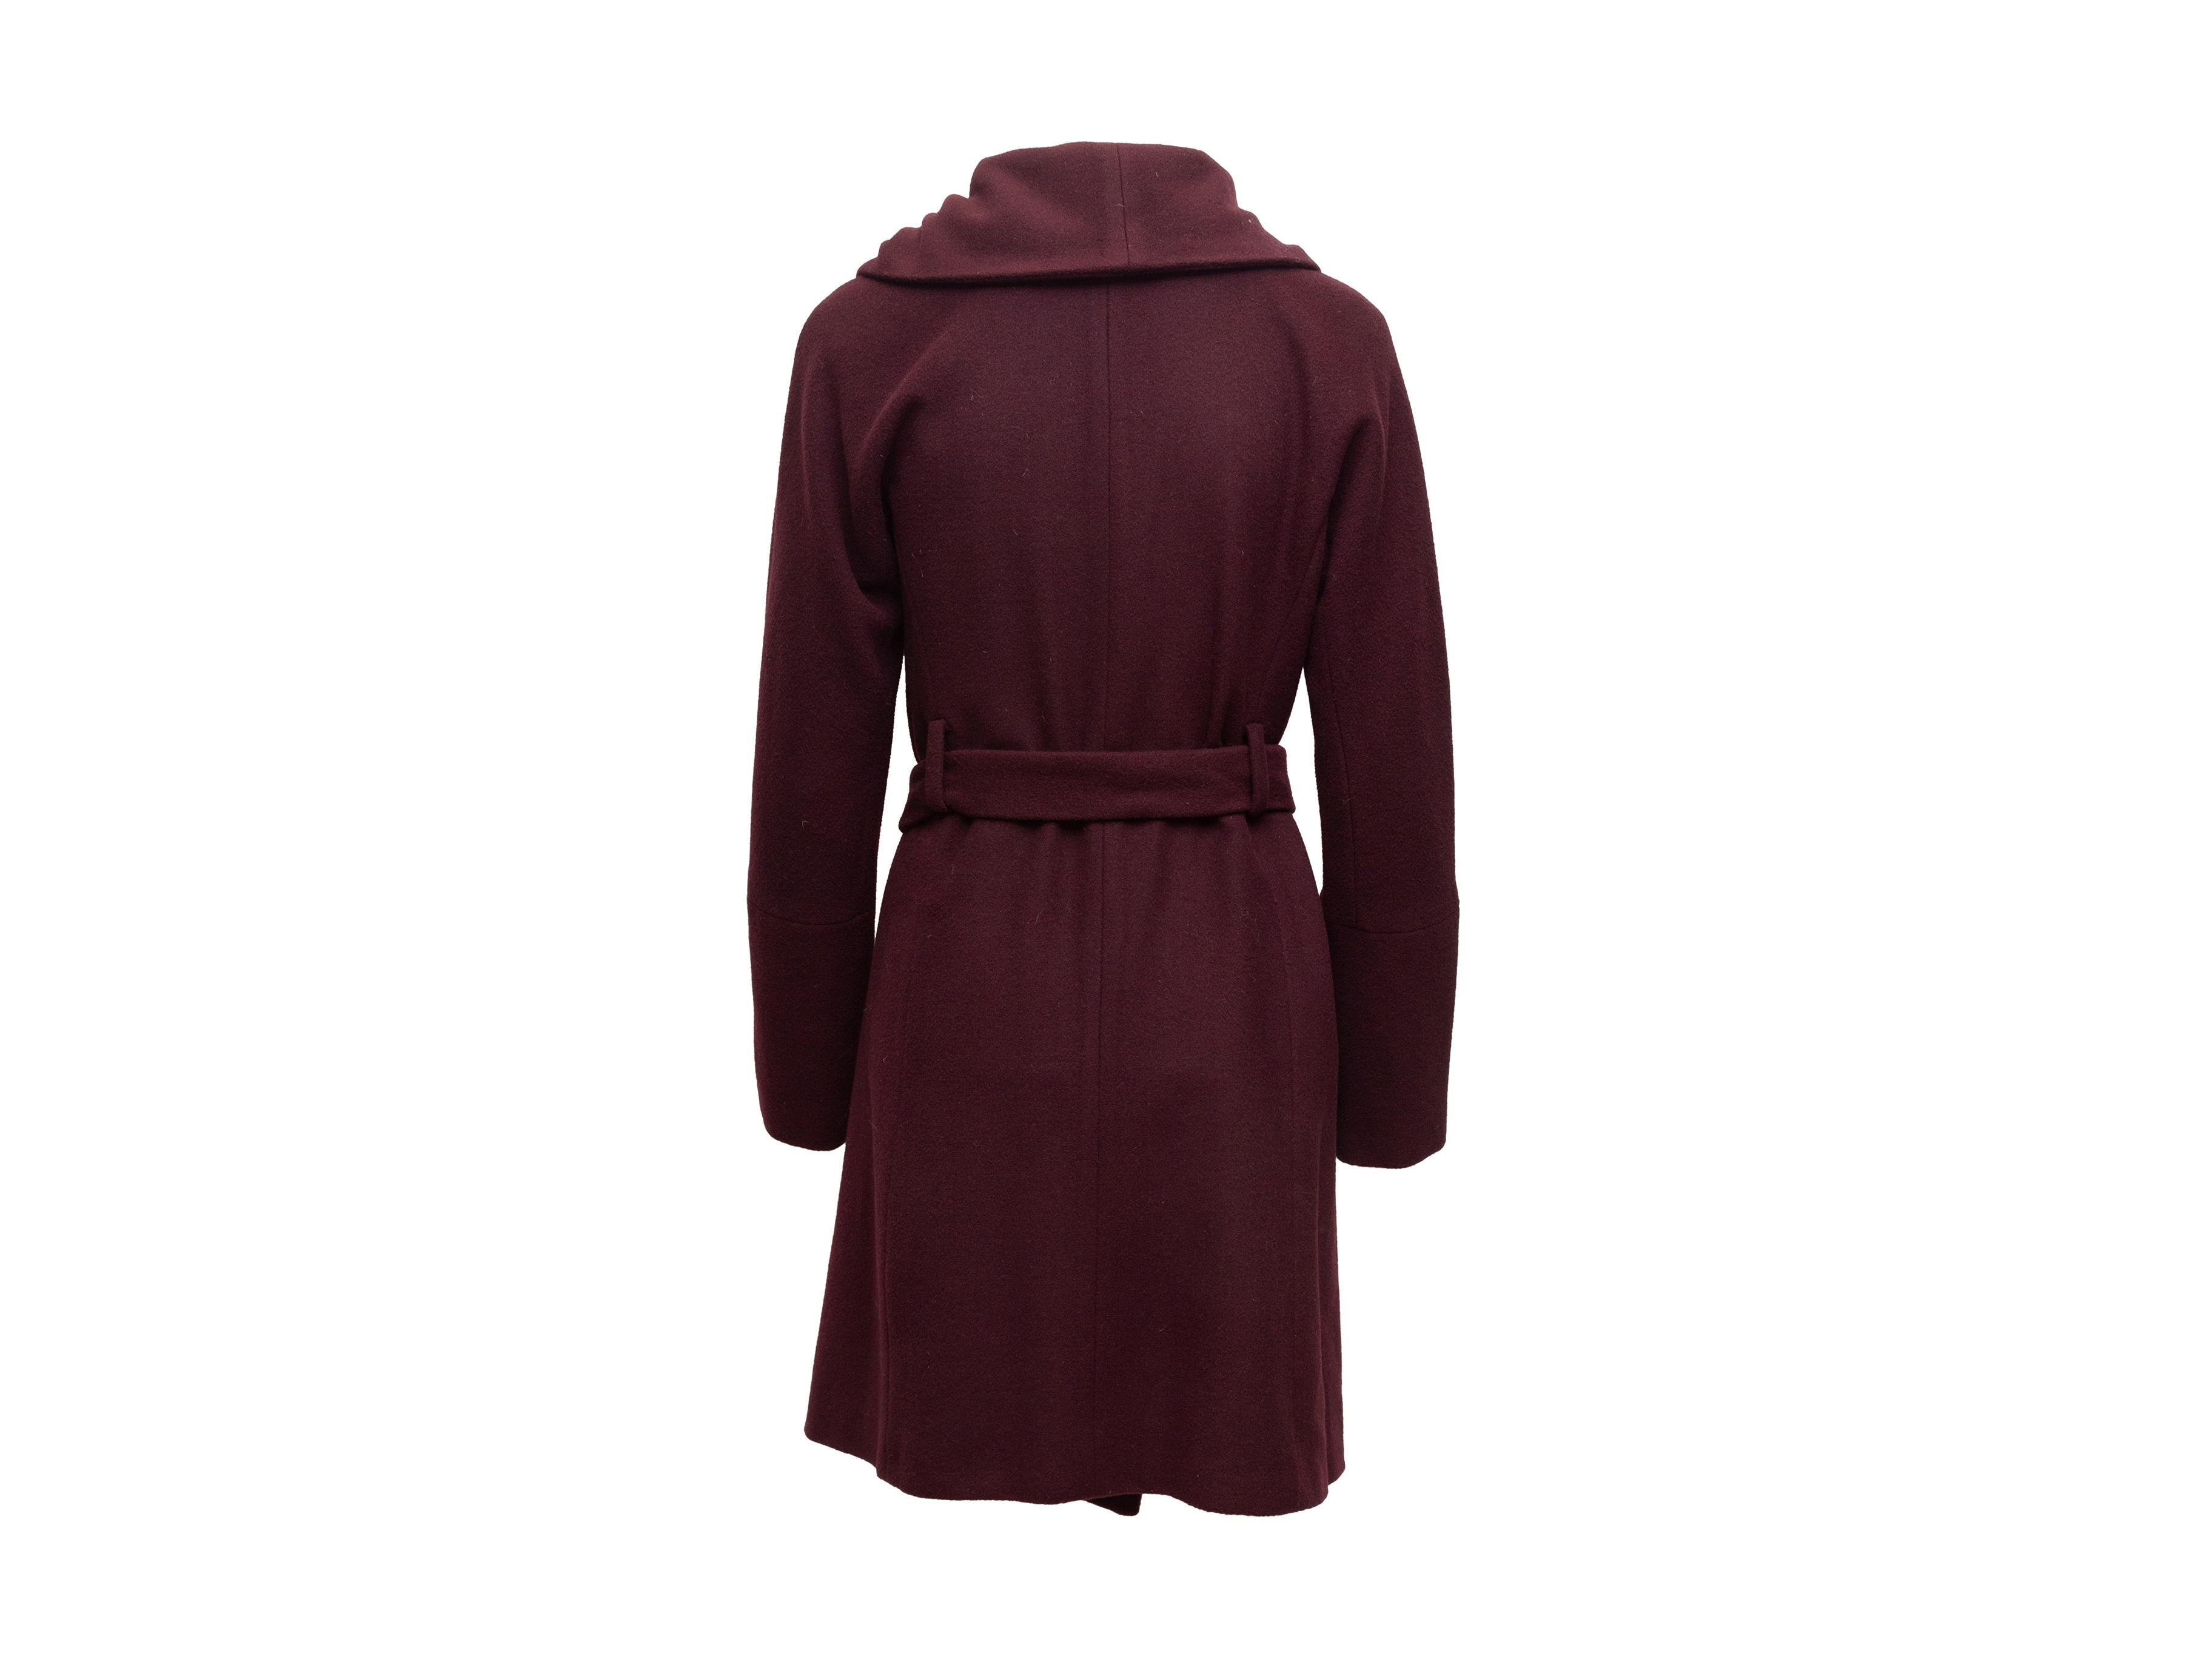 Product details: Wine wool and cashmere-blend belted coat by Diane Von Furstenberg. Foldover collar. Dual slit pockets at hips. Button closurer at front. 36